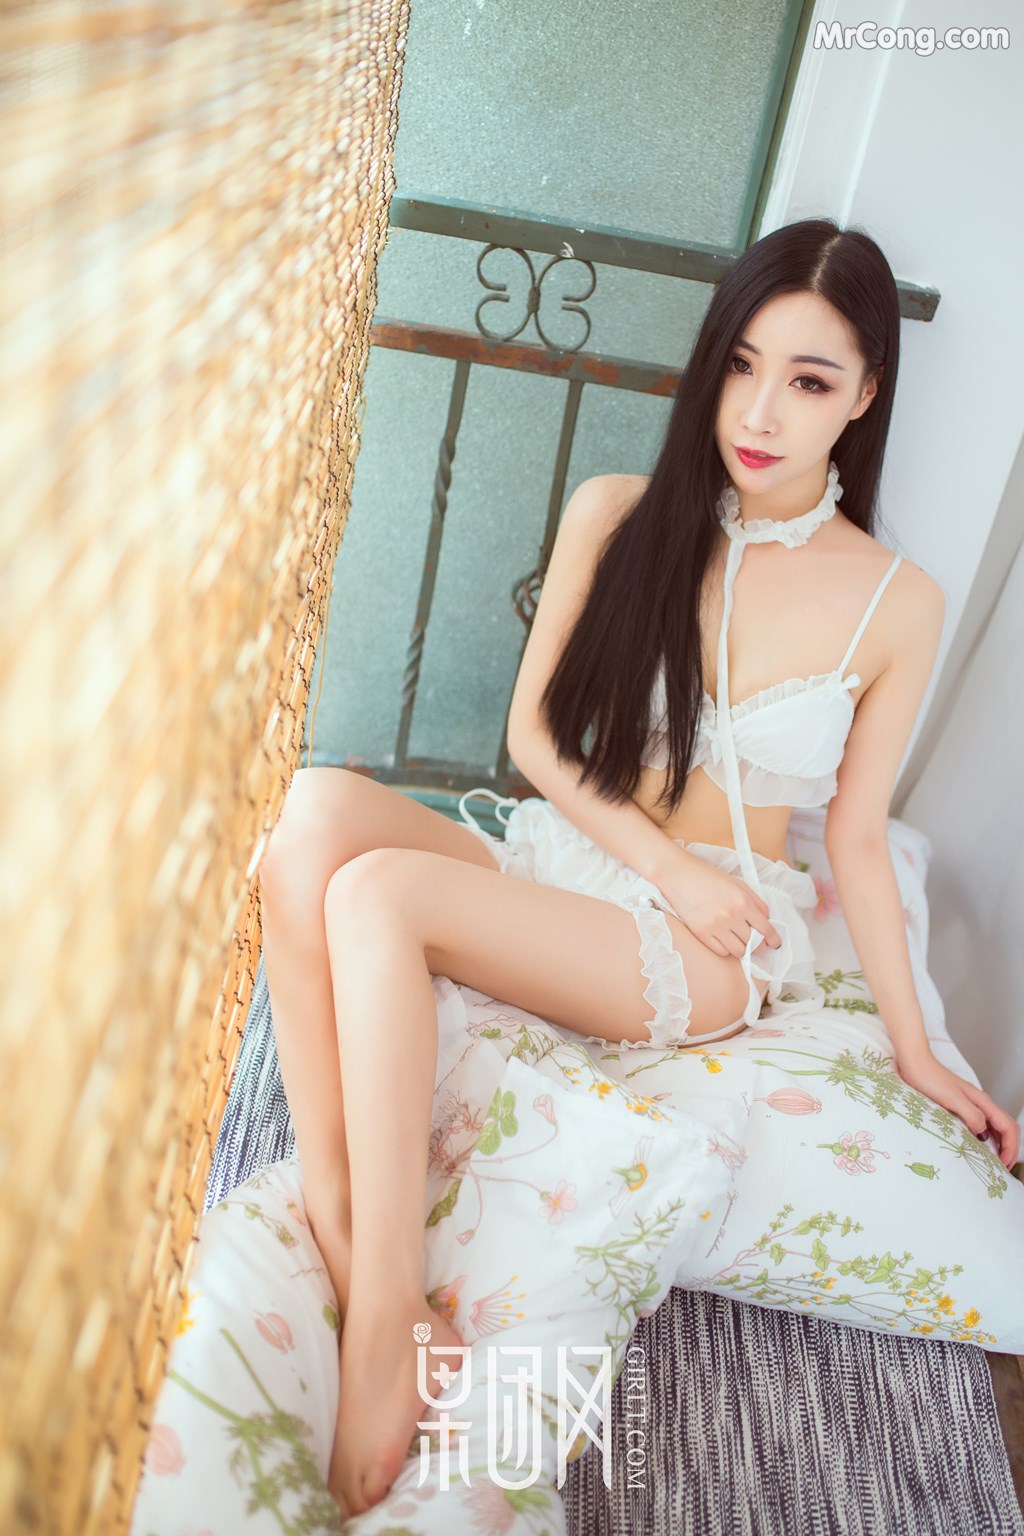 GIRLT No.099: Model Xiao Yu (小雨) (49 photos)